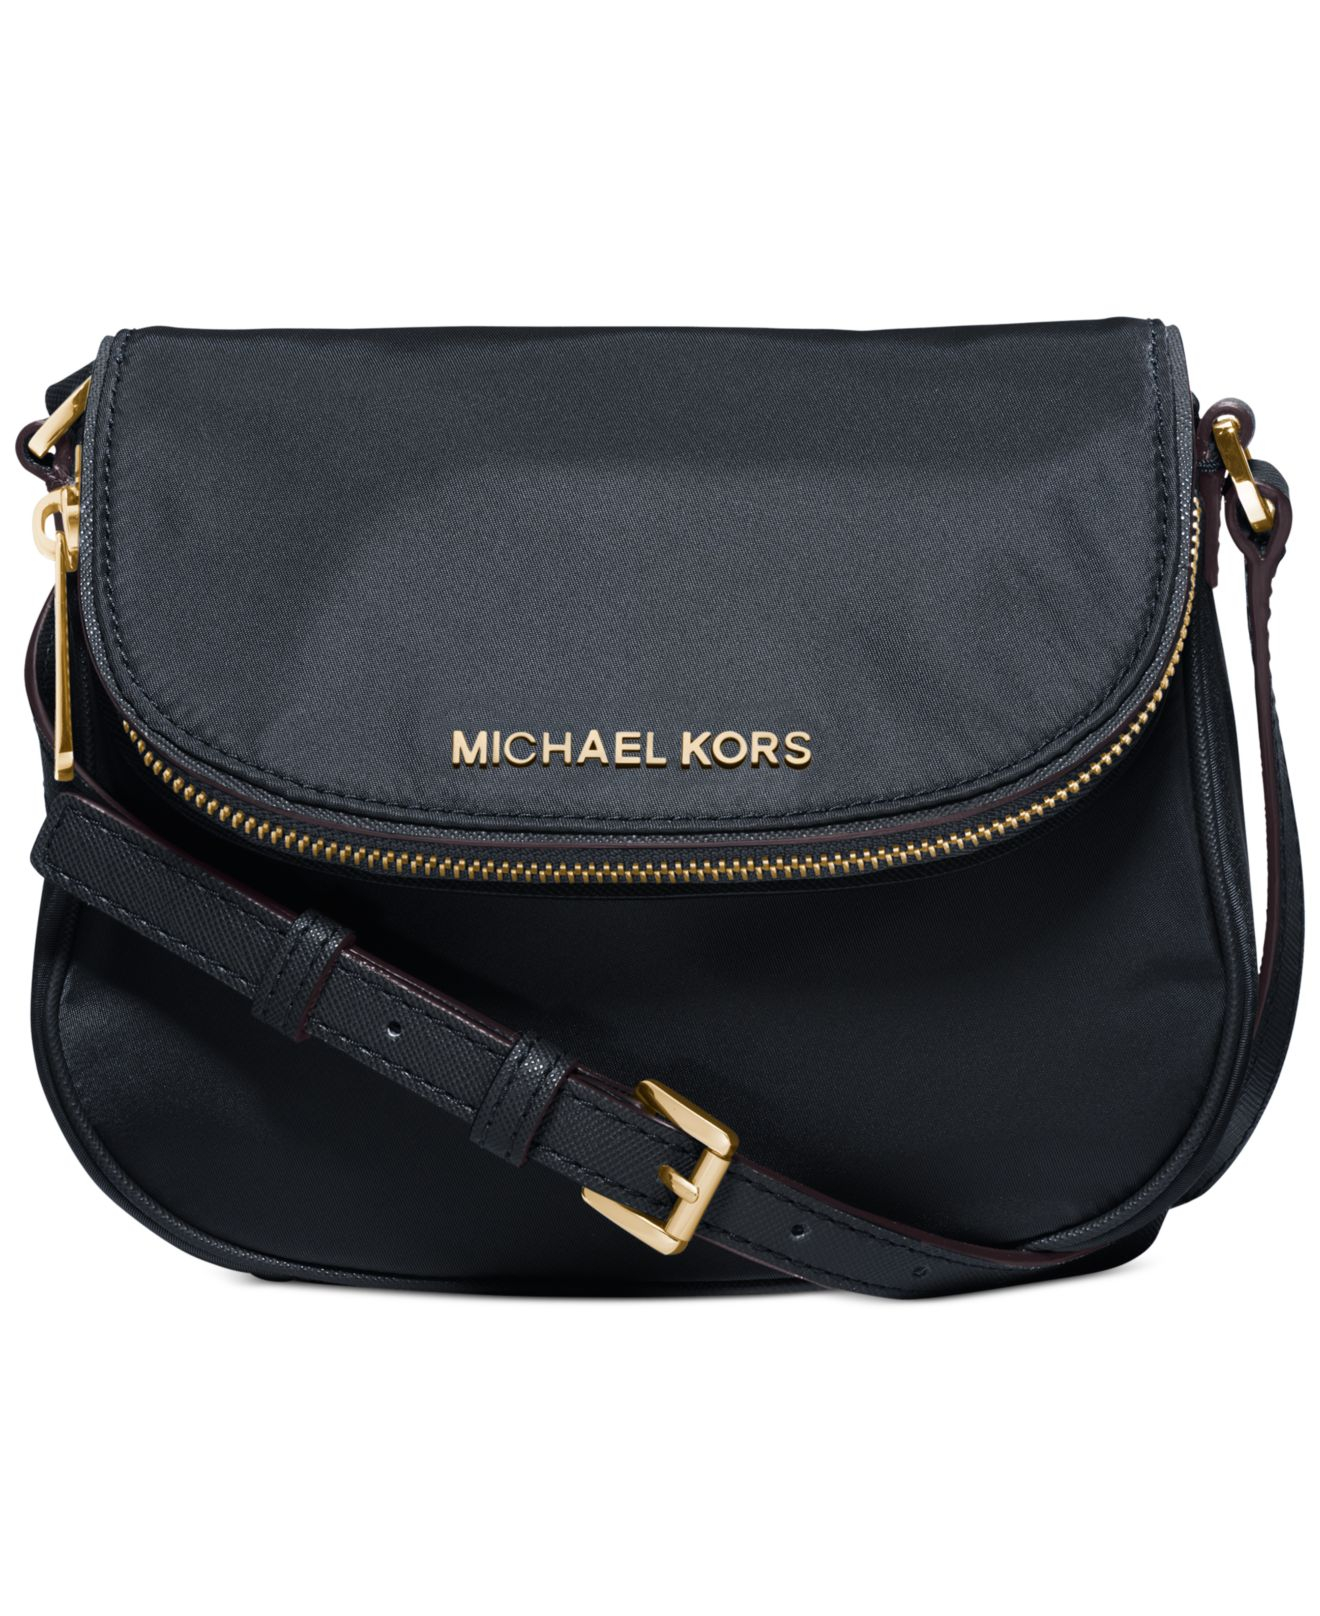 michael kors vinyl handbags